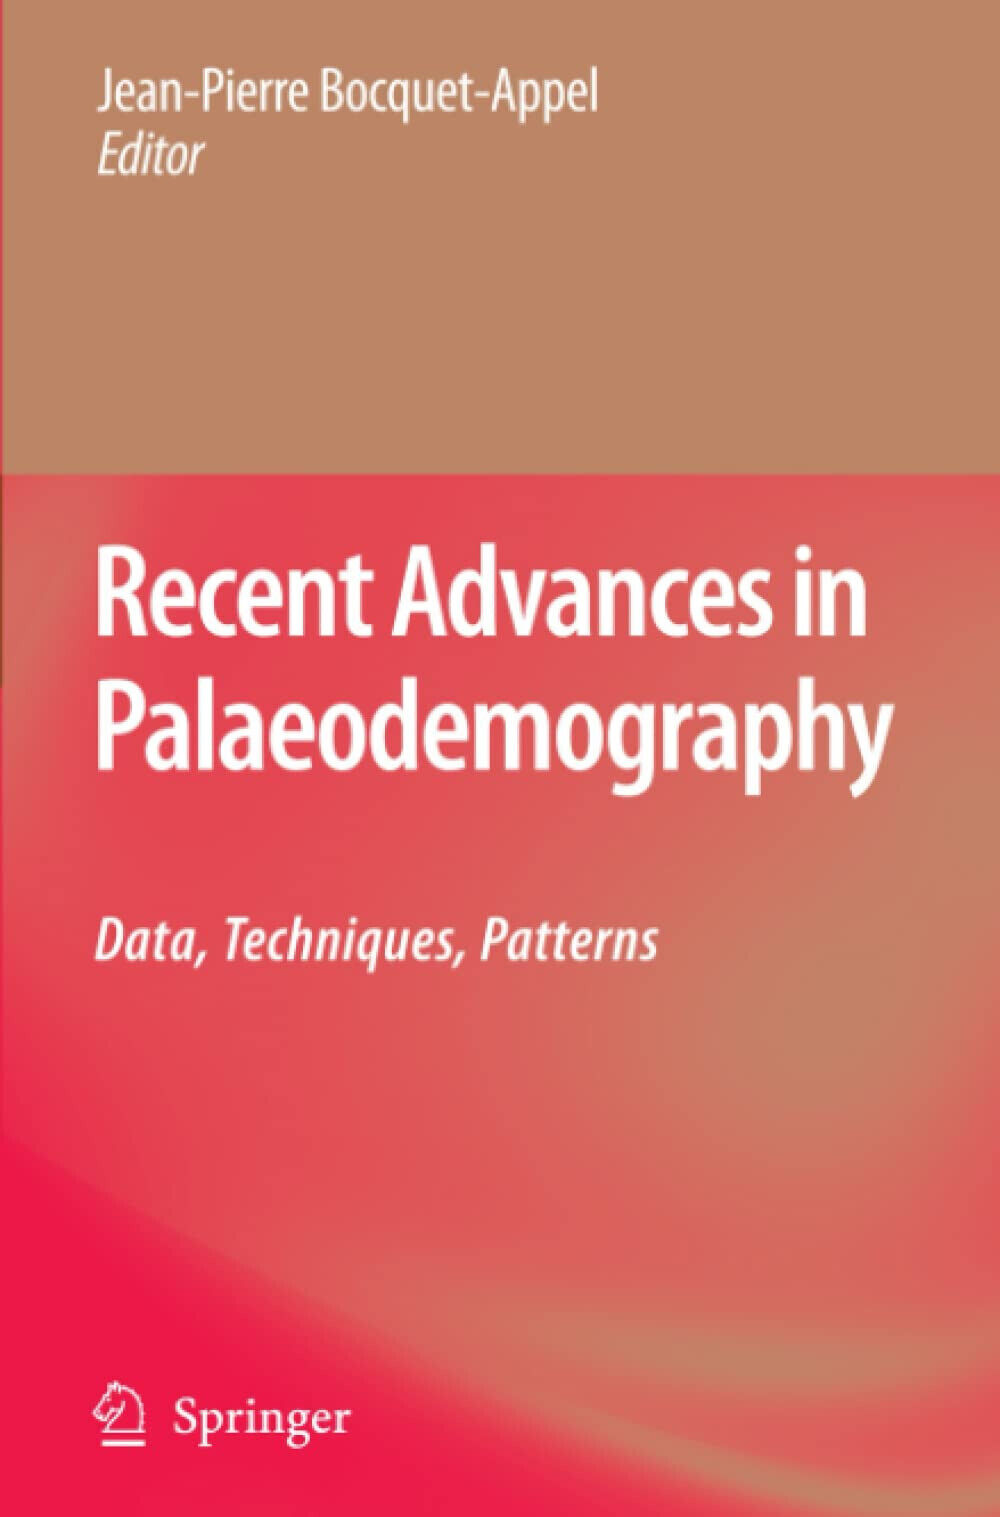 Recent Advances in Palaeodemography - Jean-Pierre Bocquet-Appel  - Springer,2010 libro usato